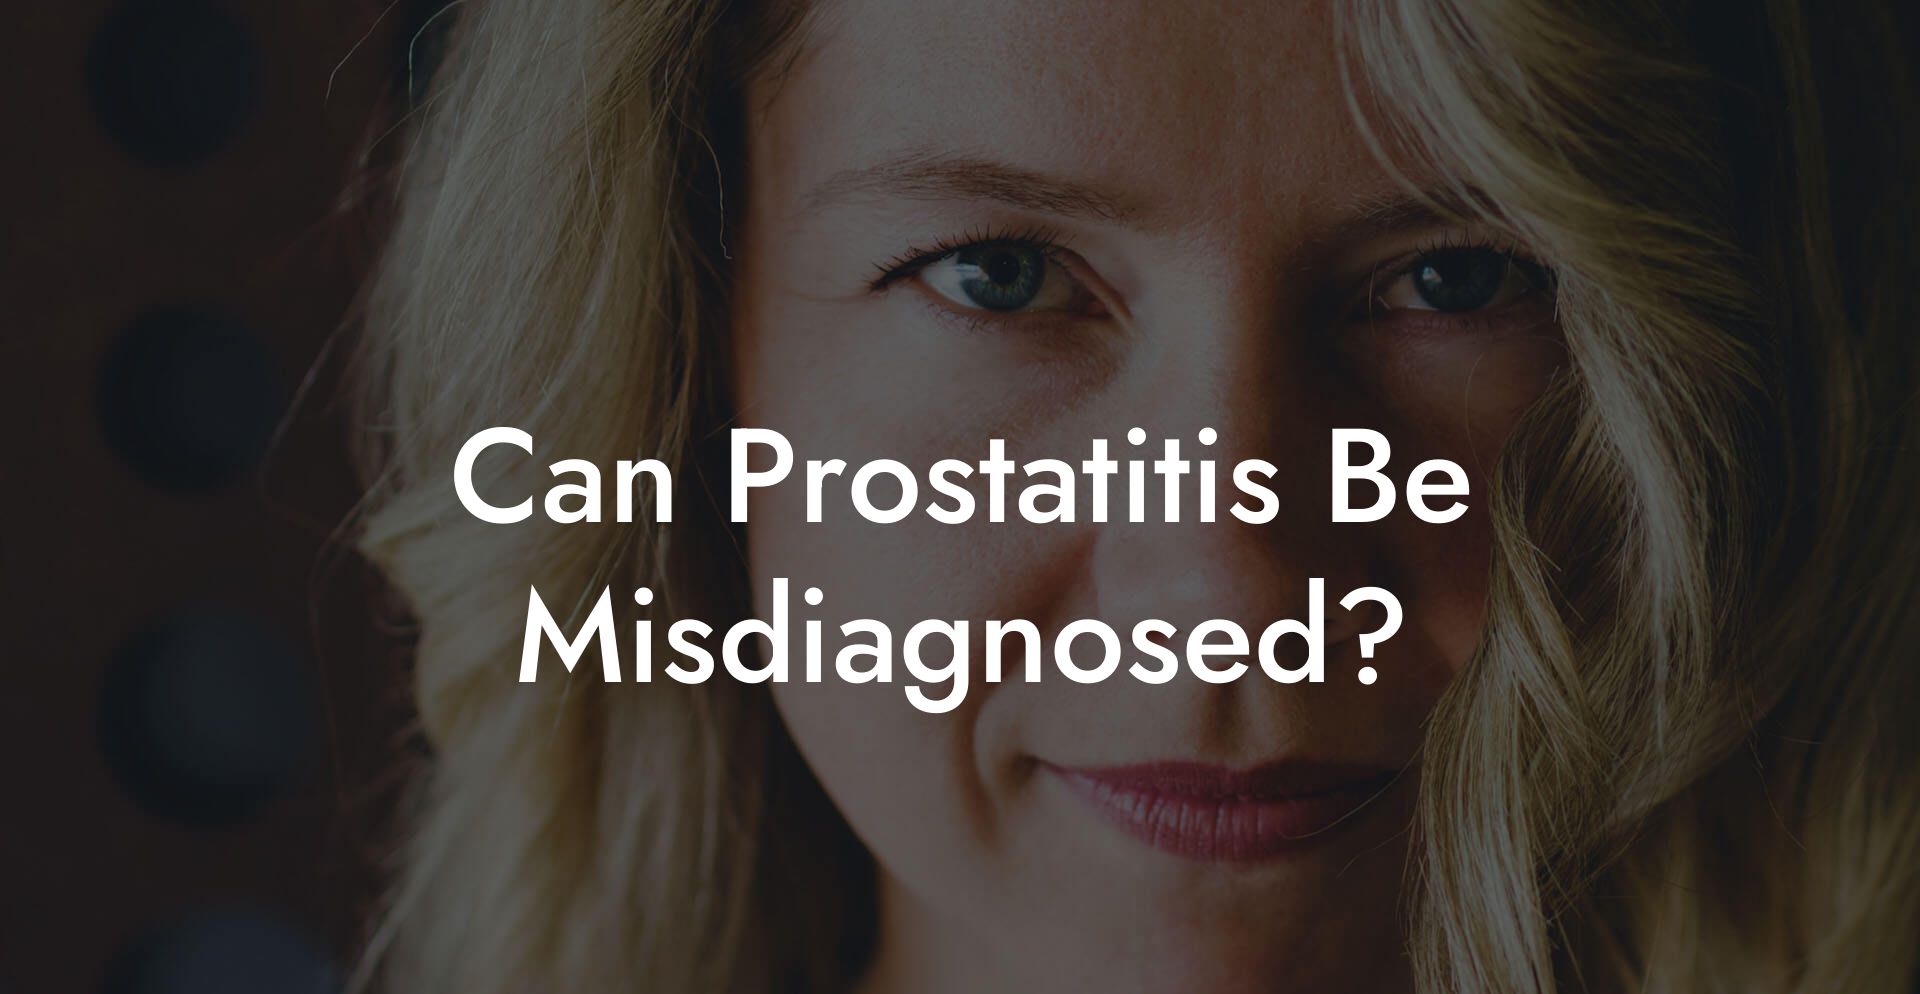 Can Prostatitis Be Misdiagnosed?